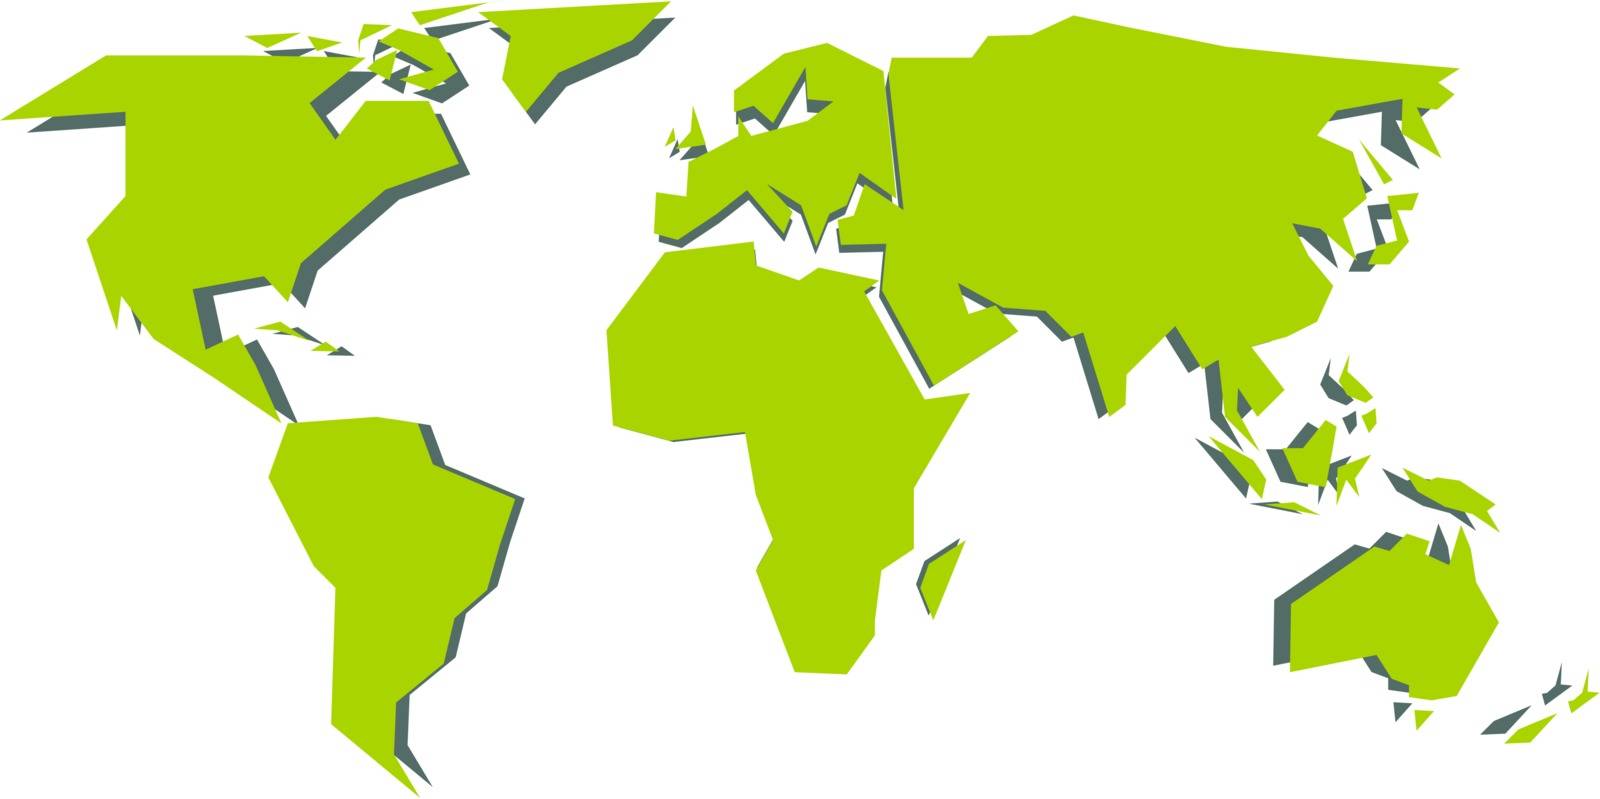 Simplified world map, vector illustration